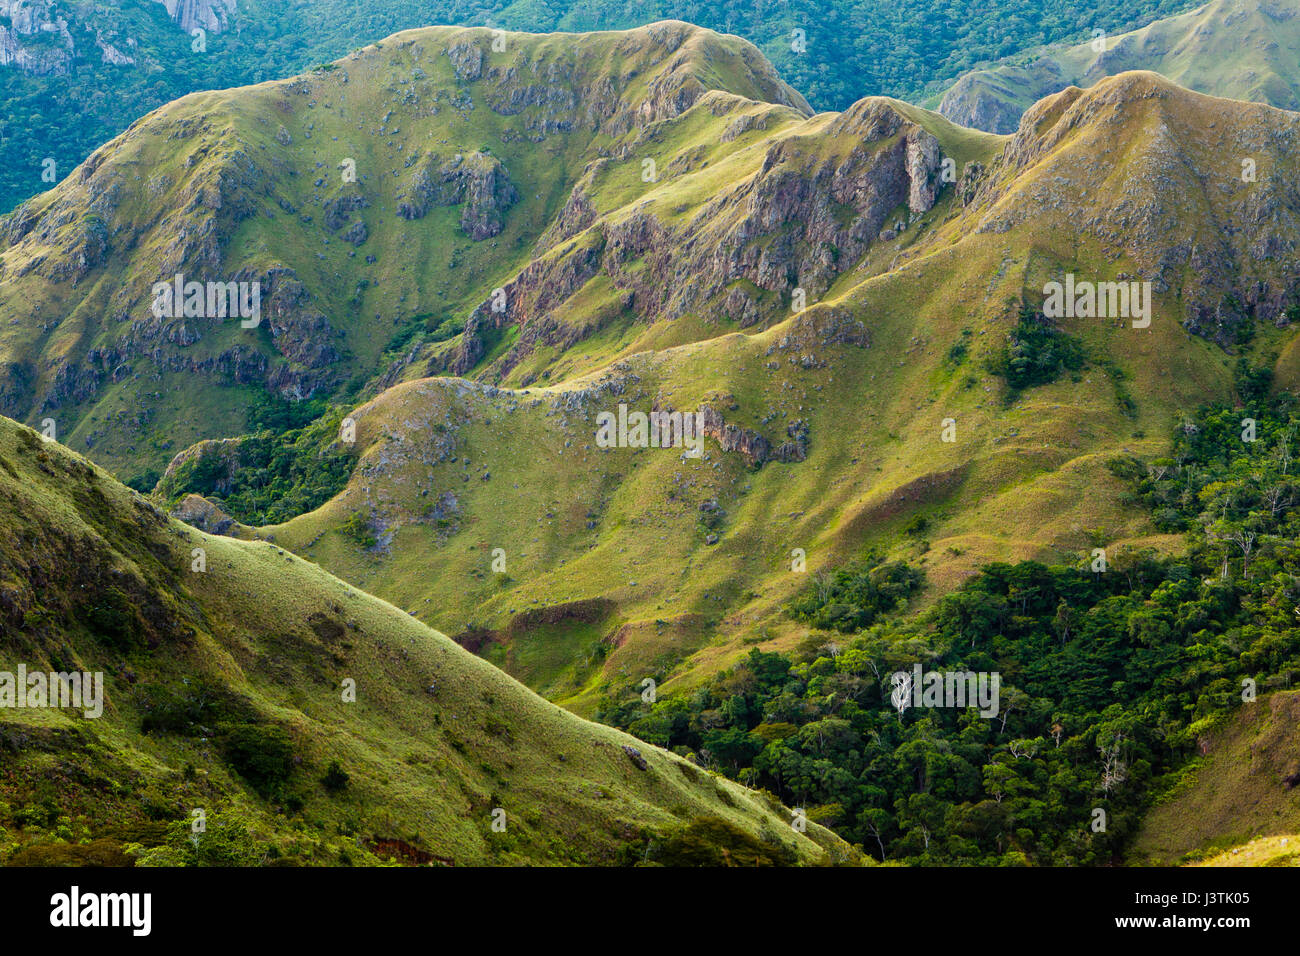 Panama landscape with mountain formations in Altos de Campana National Park, Cordillera Central, Panama province, Pacific slope, Republic of Panama Stock Photo